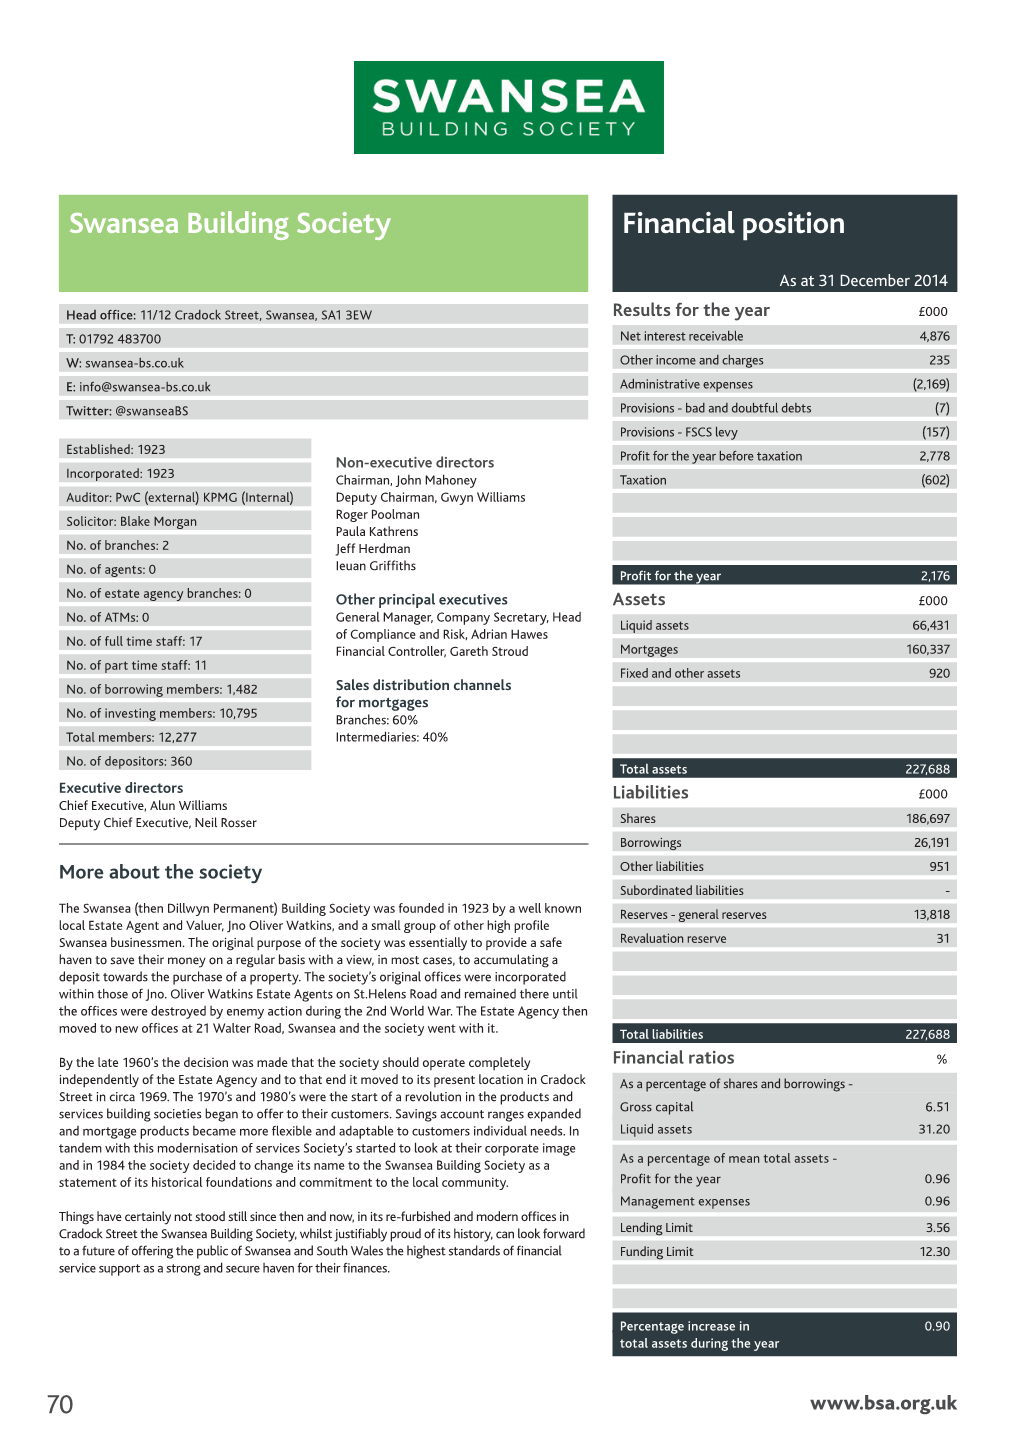 Swansea Building Society Financial Position